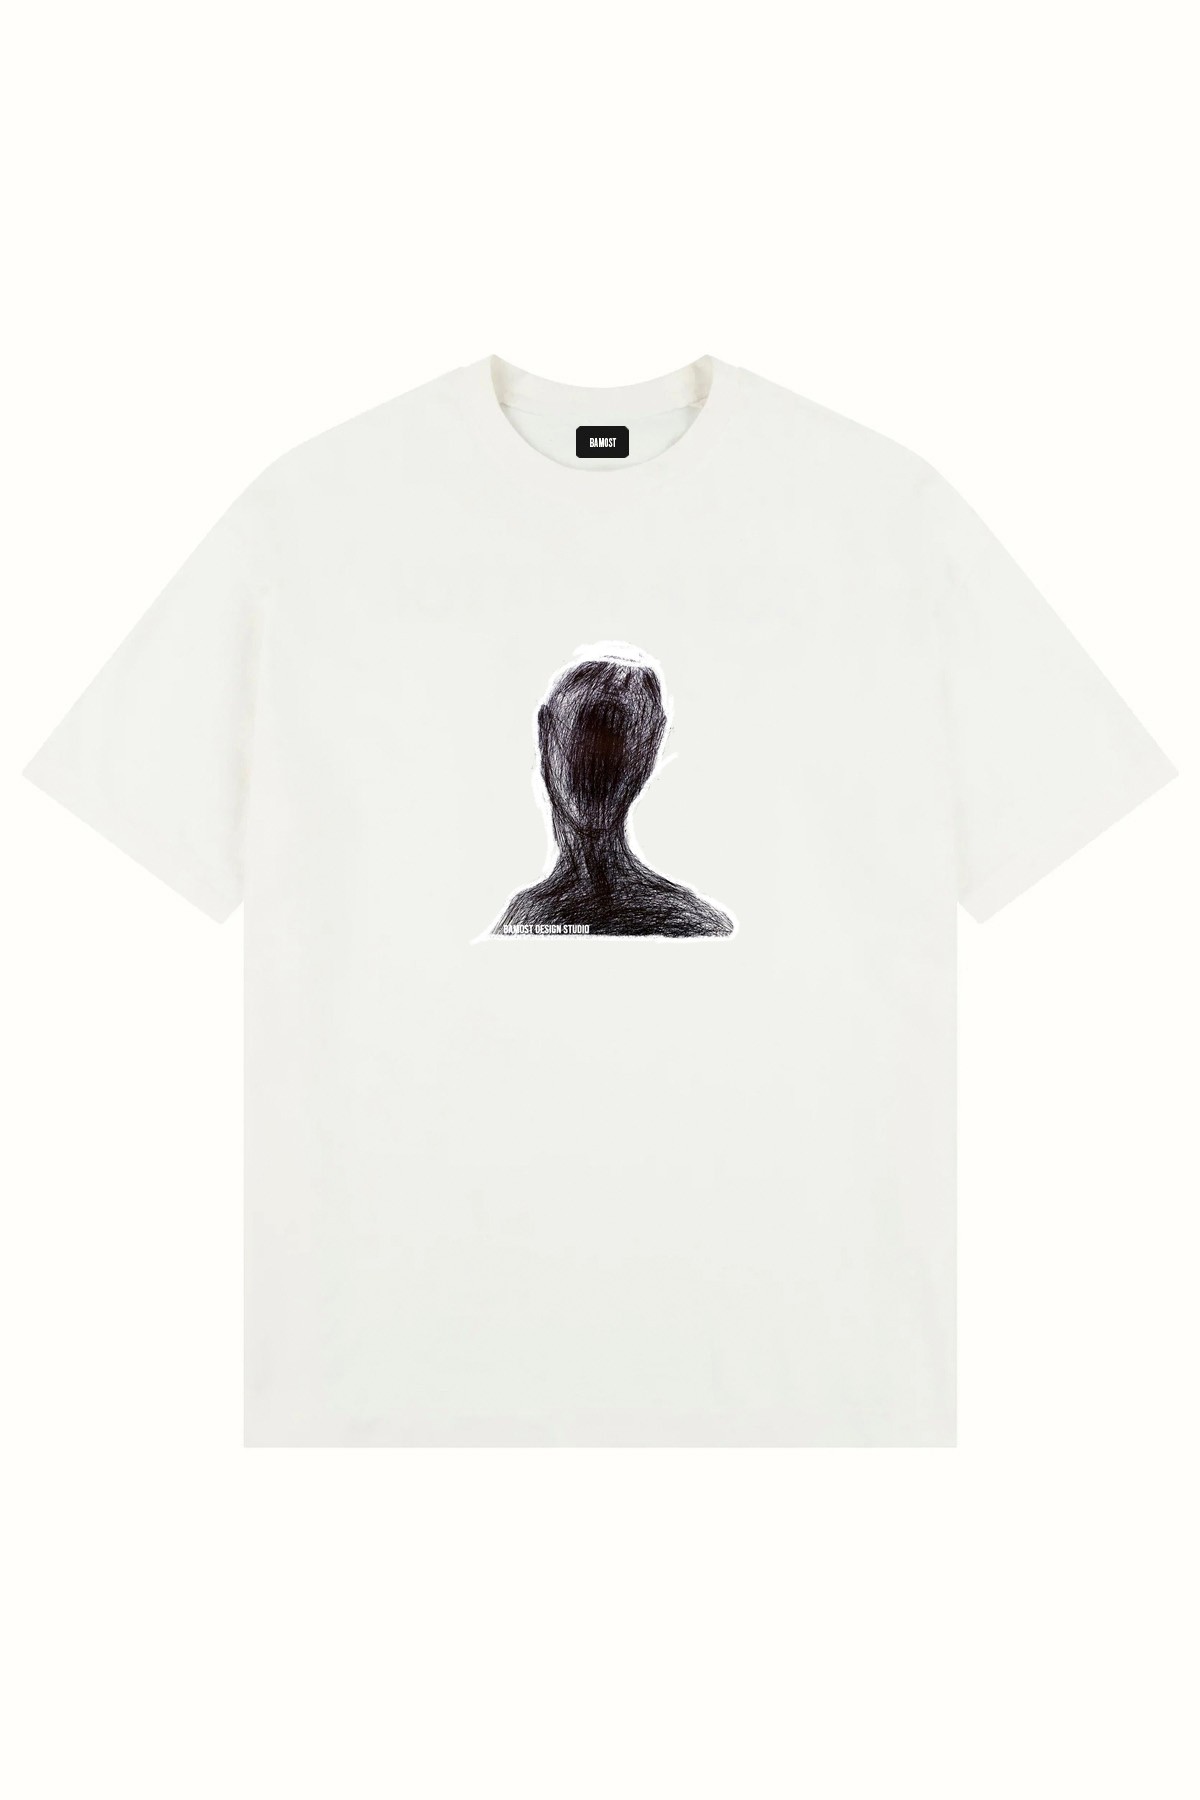 2012 - Oversize Printed T-Shirt